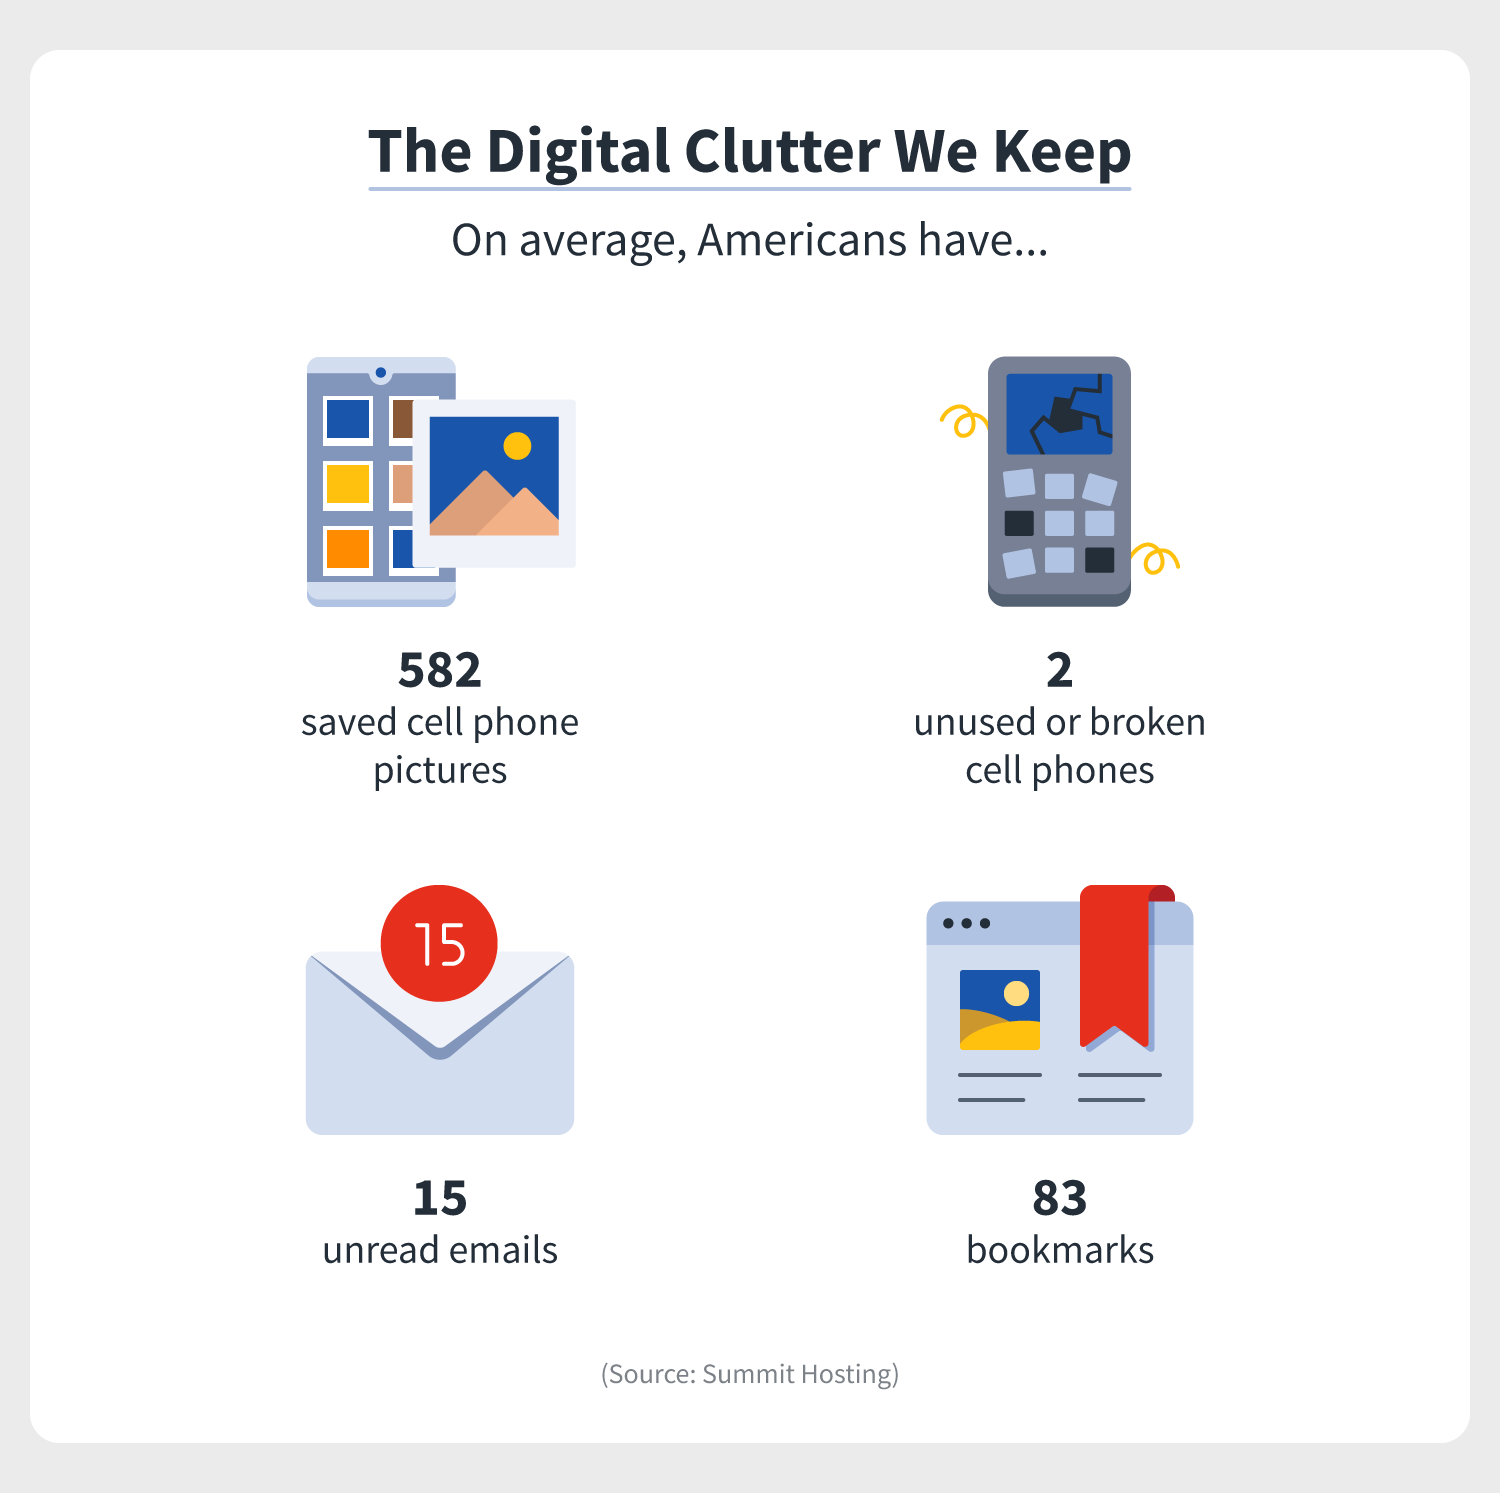 digital hoarding statistics regarding digital clutter, including bookmarks, unread emails, broken cell phones, and photos